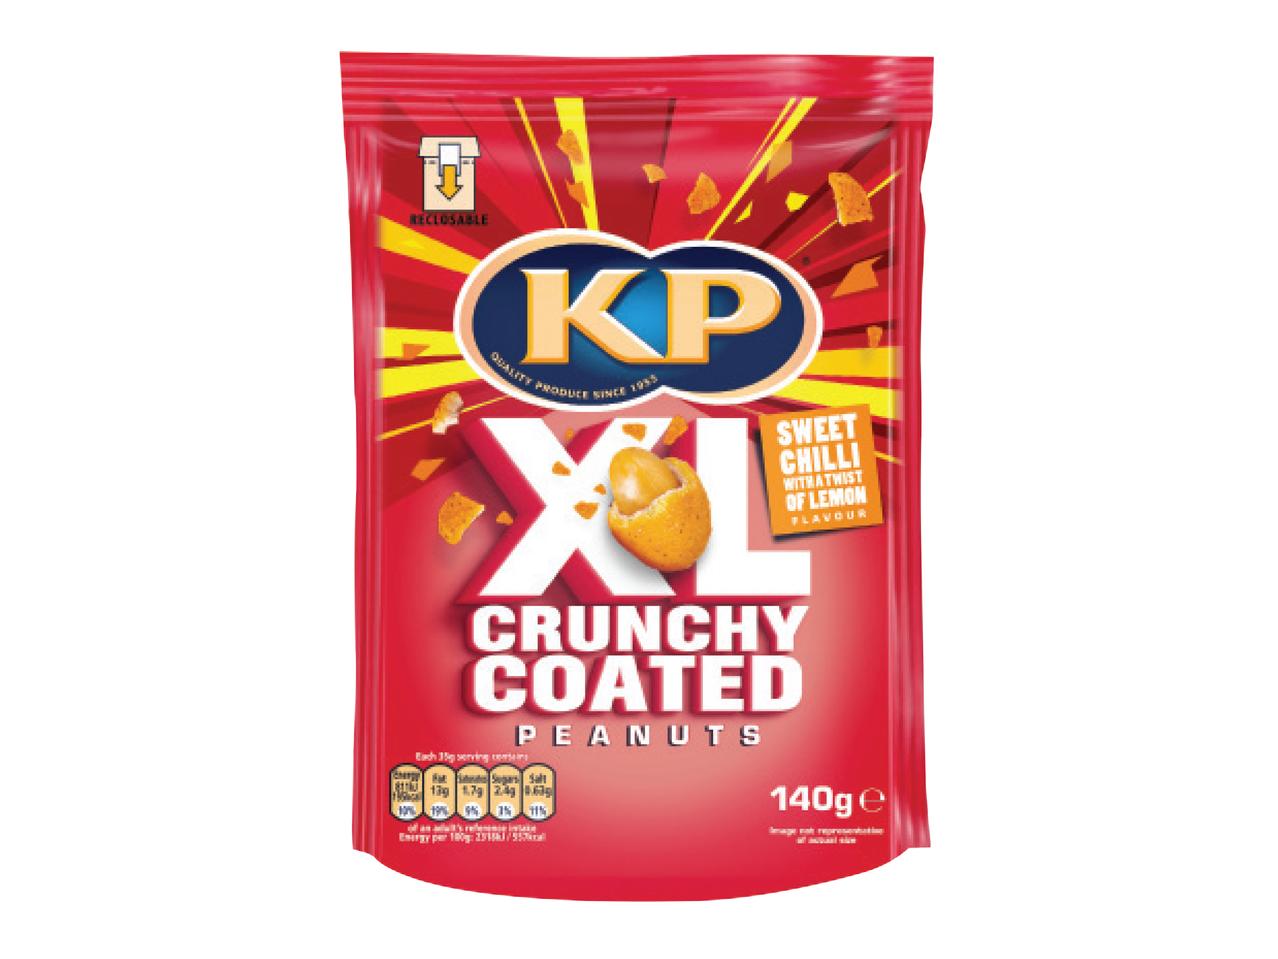 KP XL Crunchy Peanuts - Sweet Chilli & Lemon